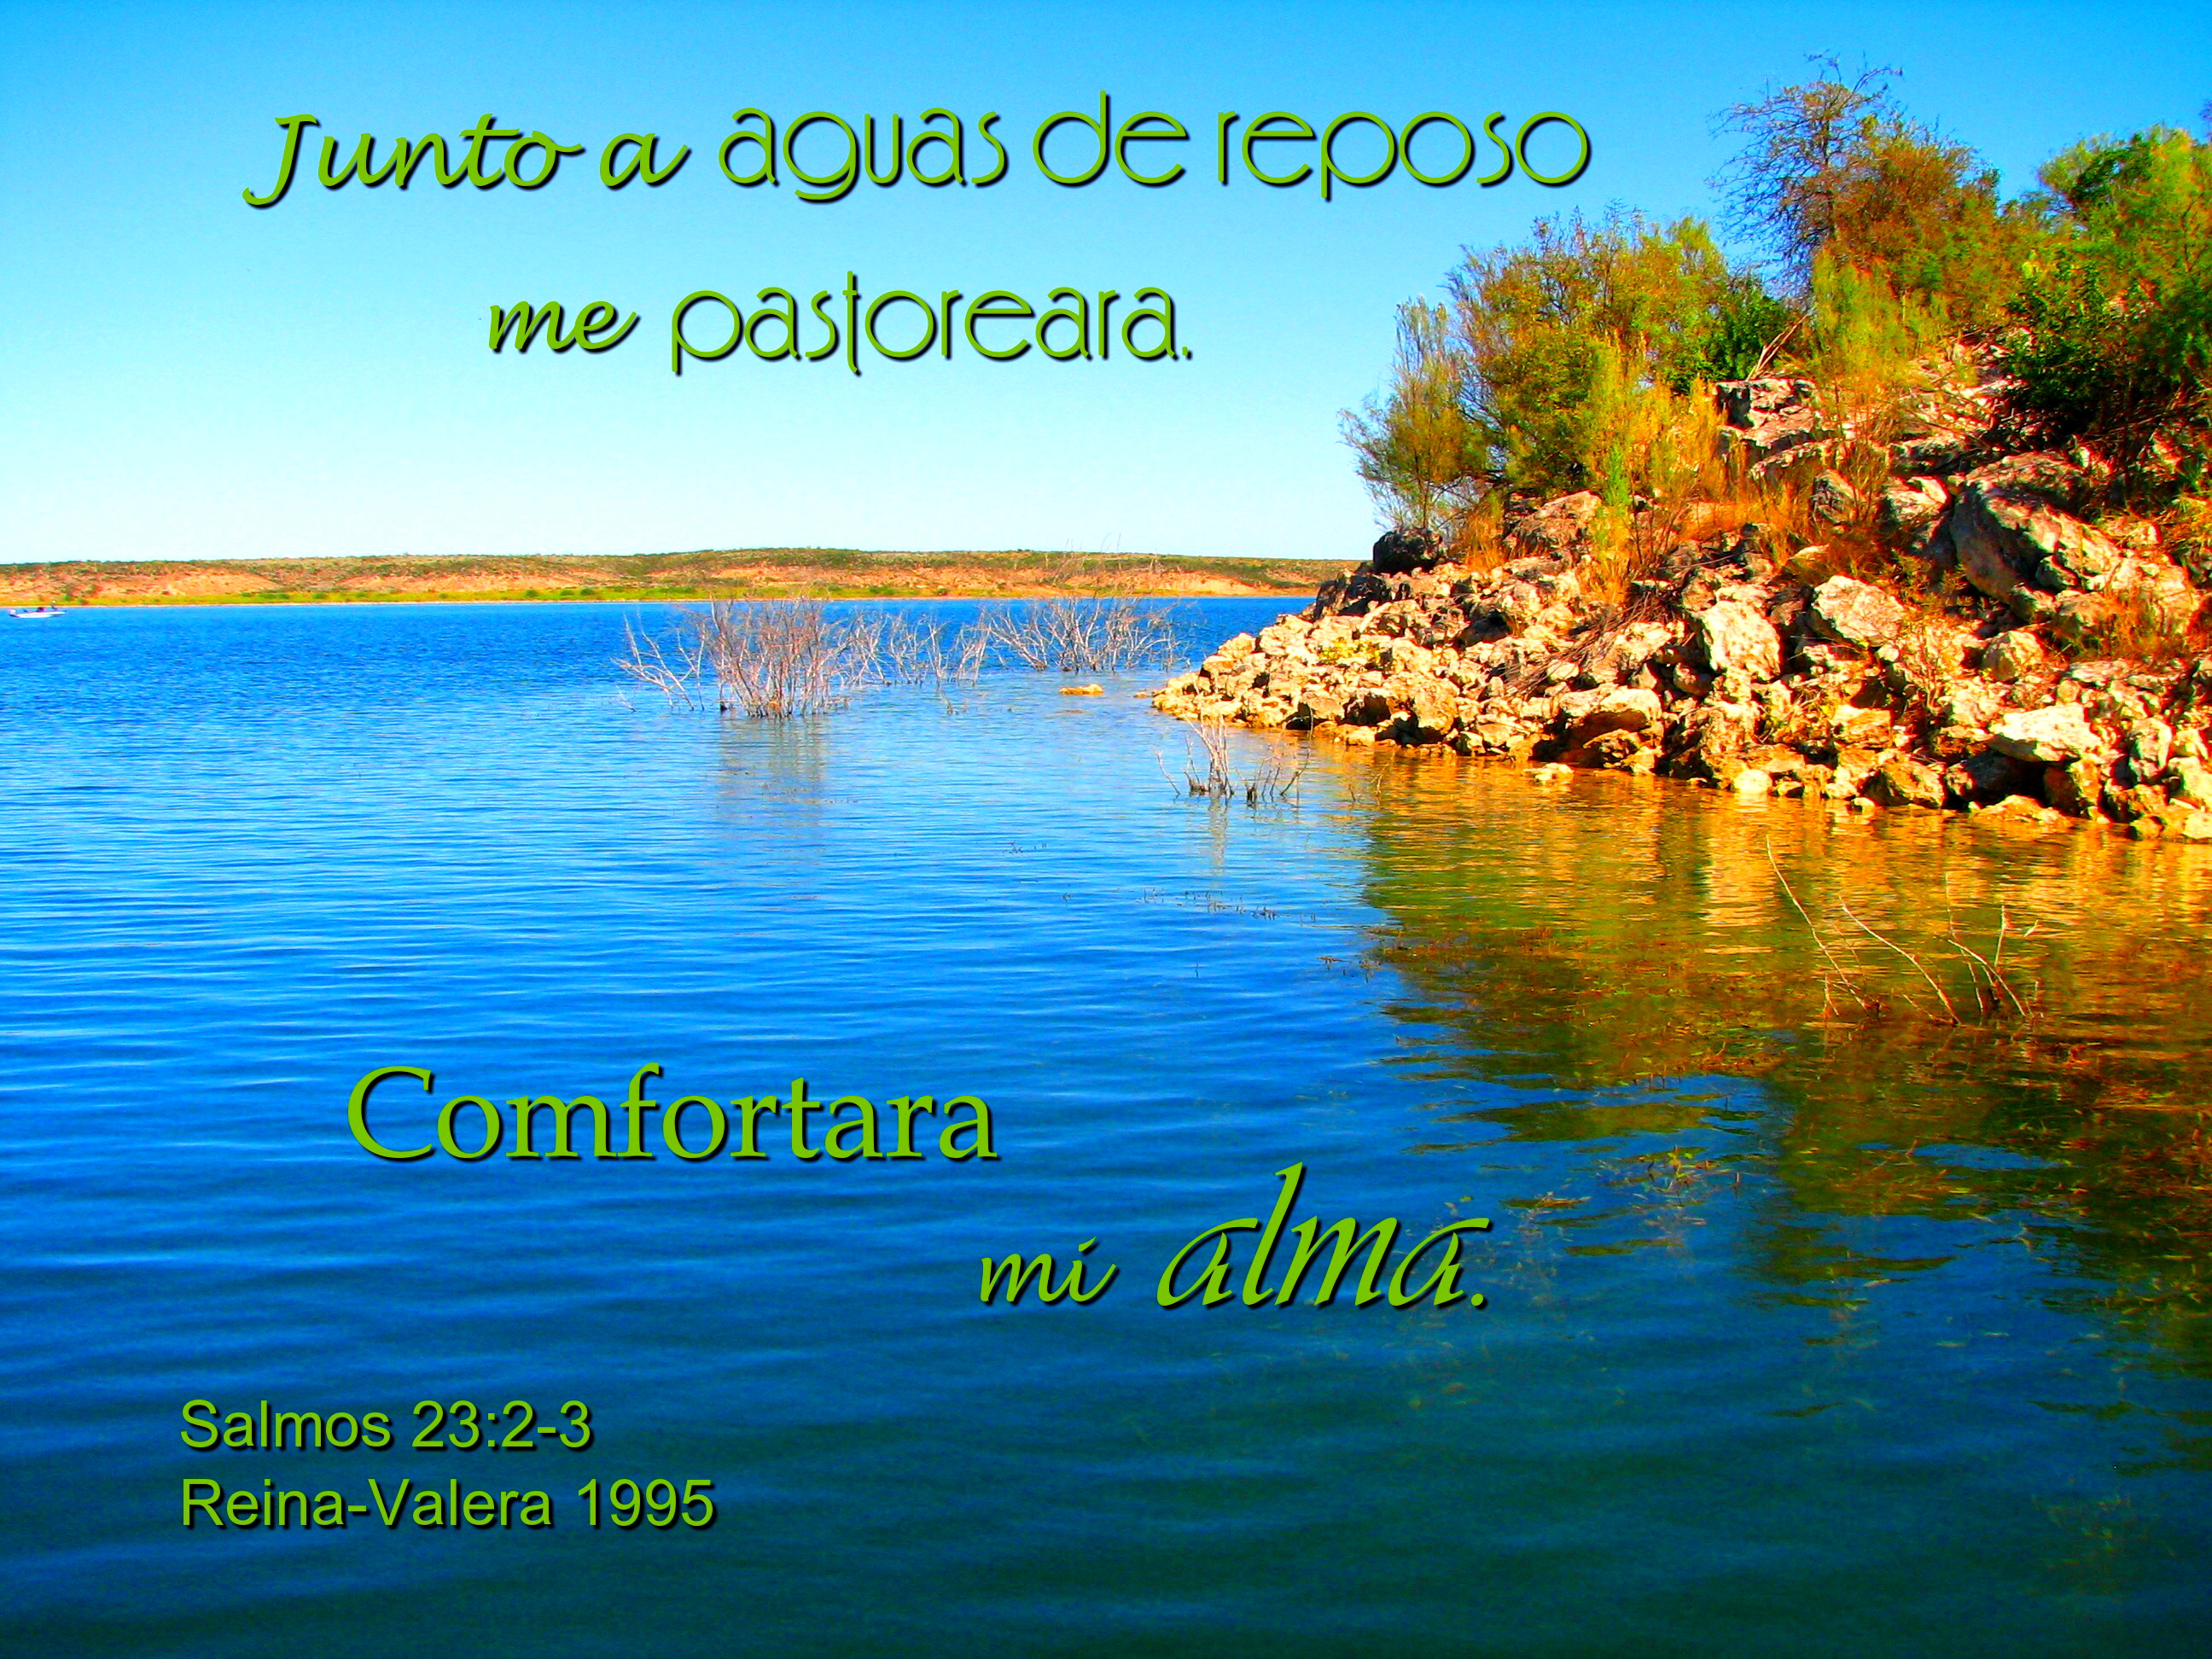 Spanish text comfortara mi alma photo